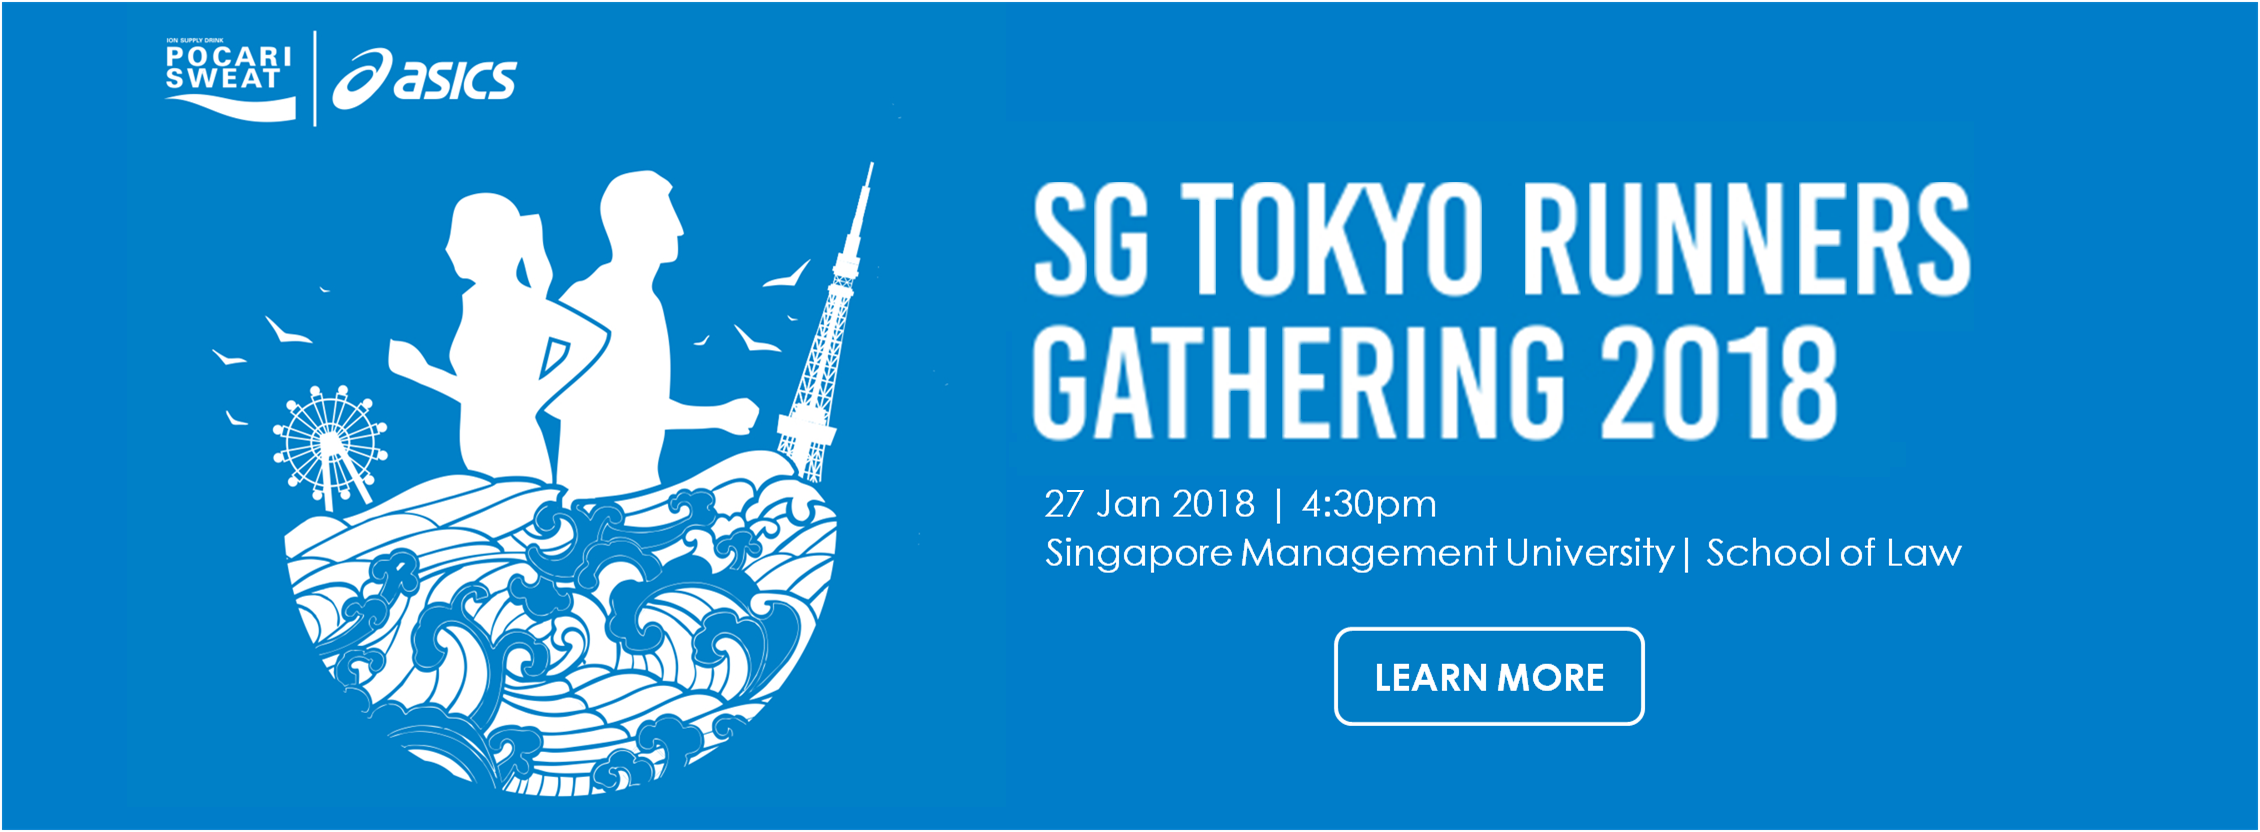 SGTokyoRunners Gathering ( 27 Jan 2018)